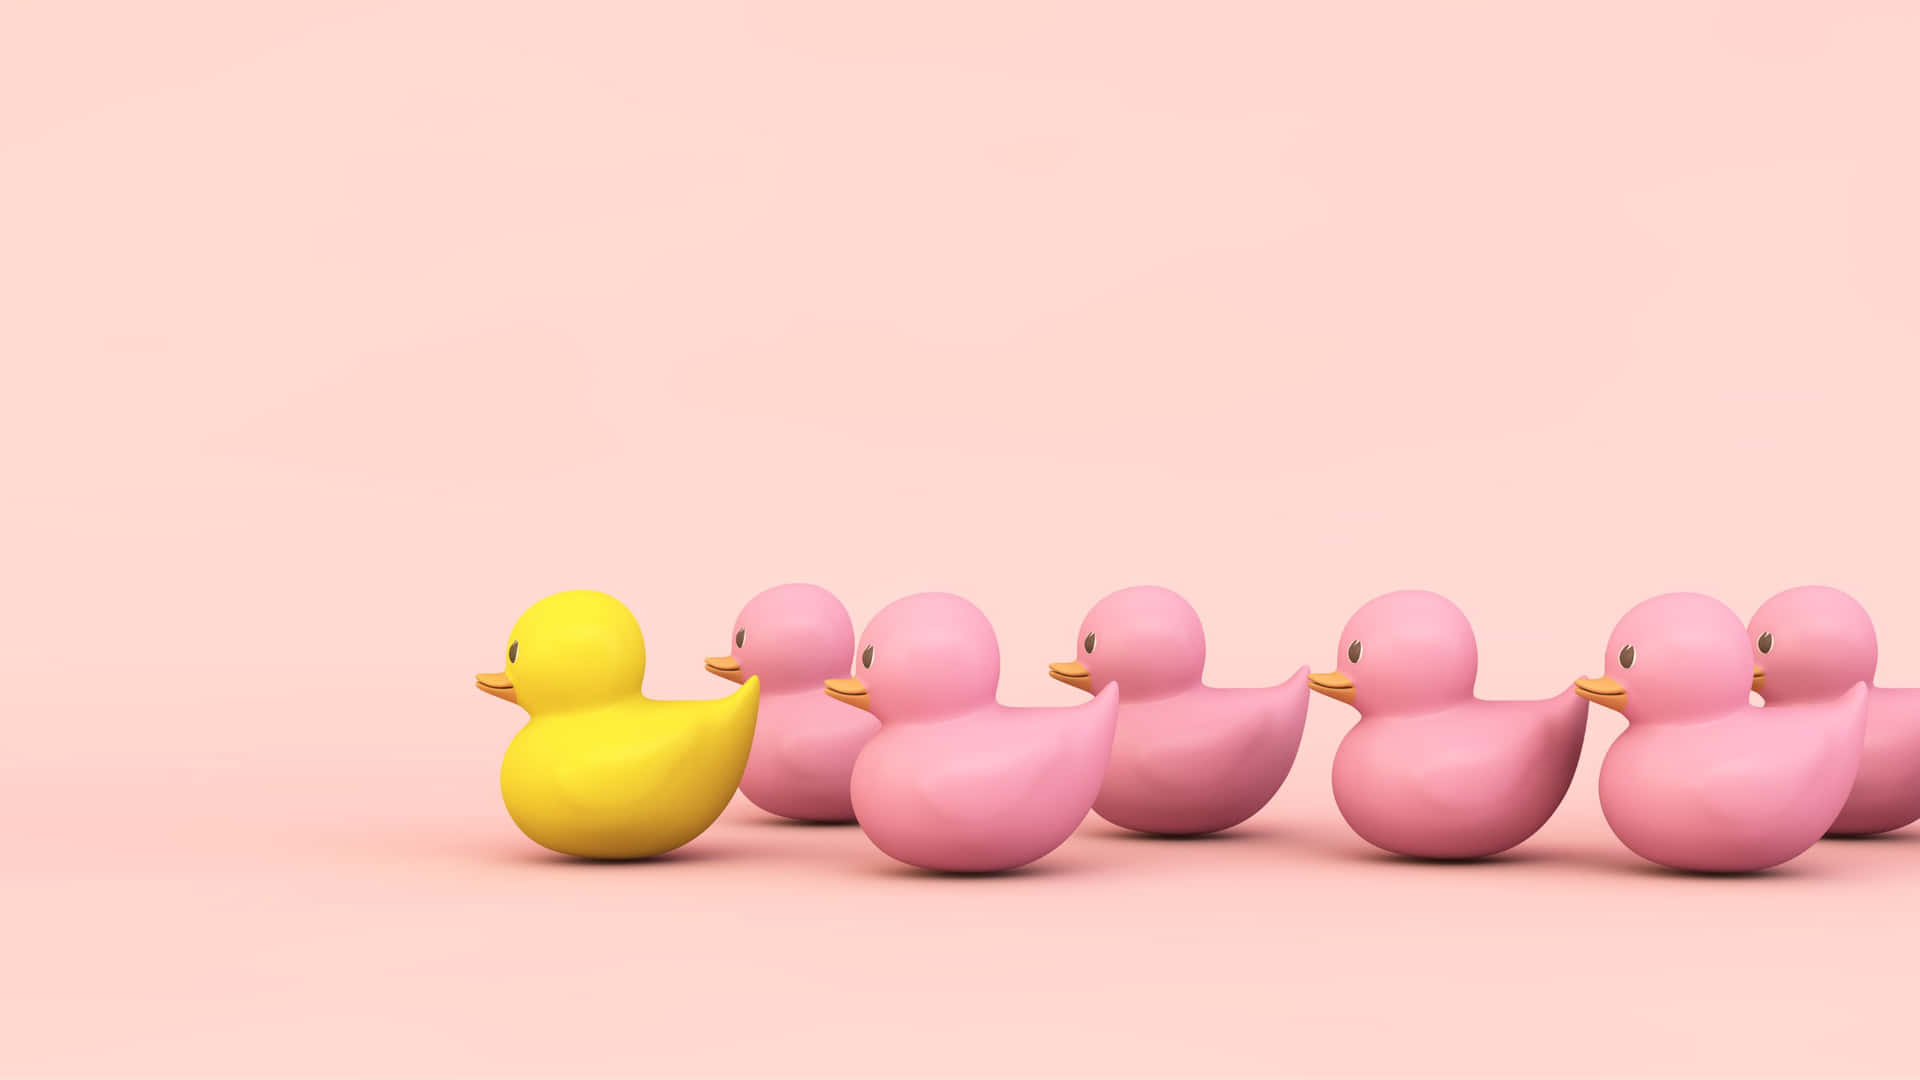 Unique Yellow Rubber Duck Leading Pink Ducks.jpg Wallpaper